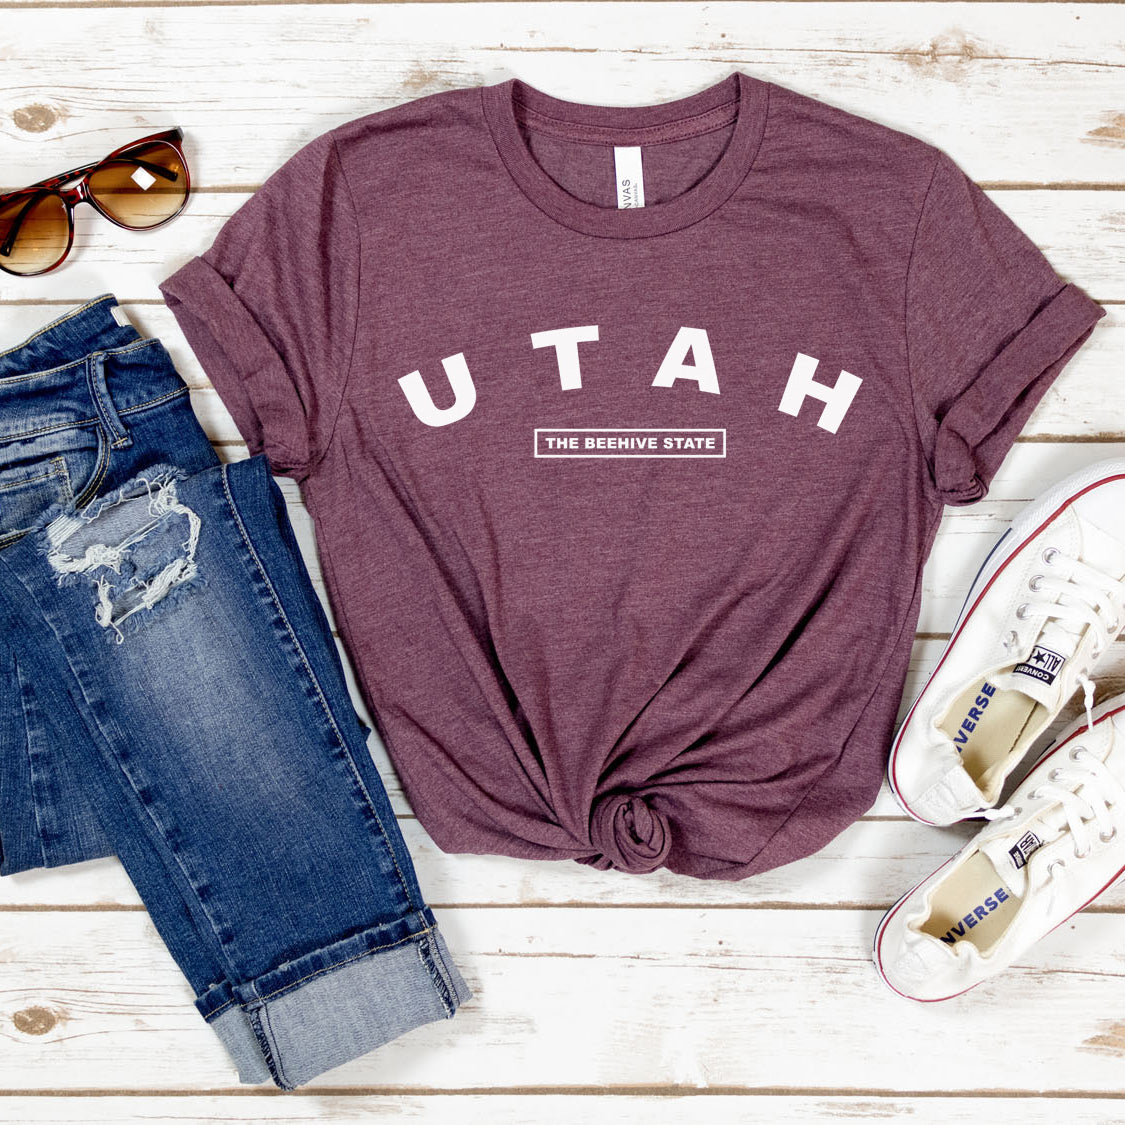 Utah The Beehive State T-shirt - United States Name & Slogan Minimal Design Printed Tee Shirt